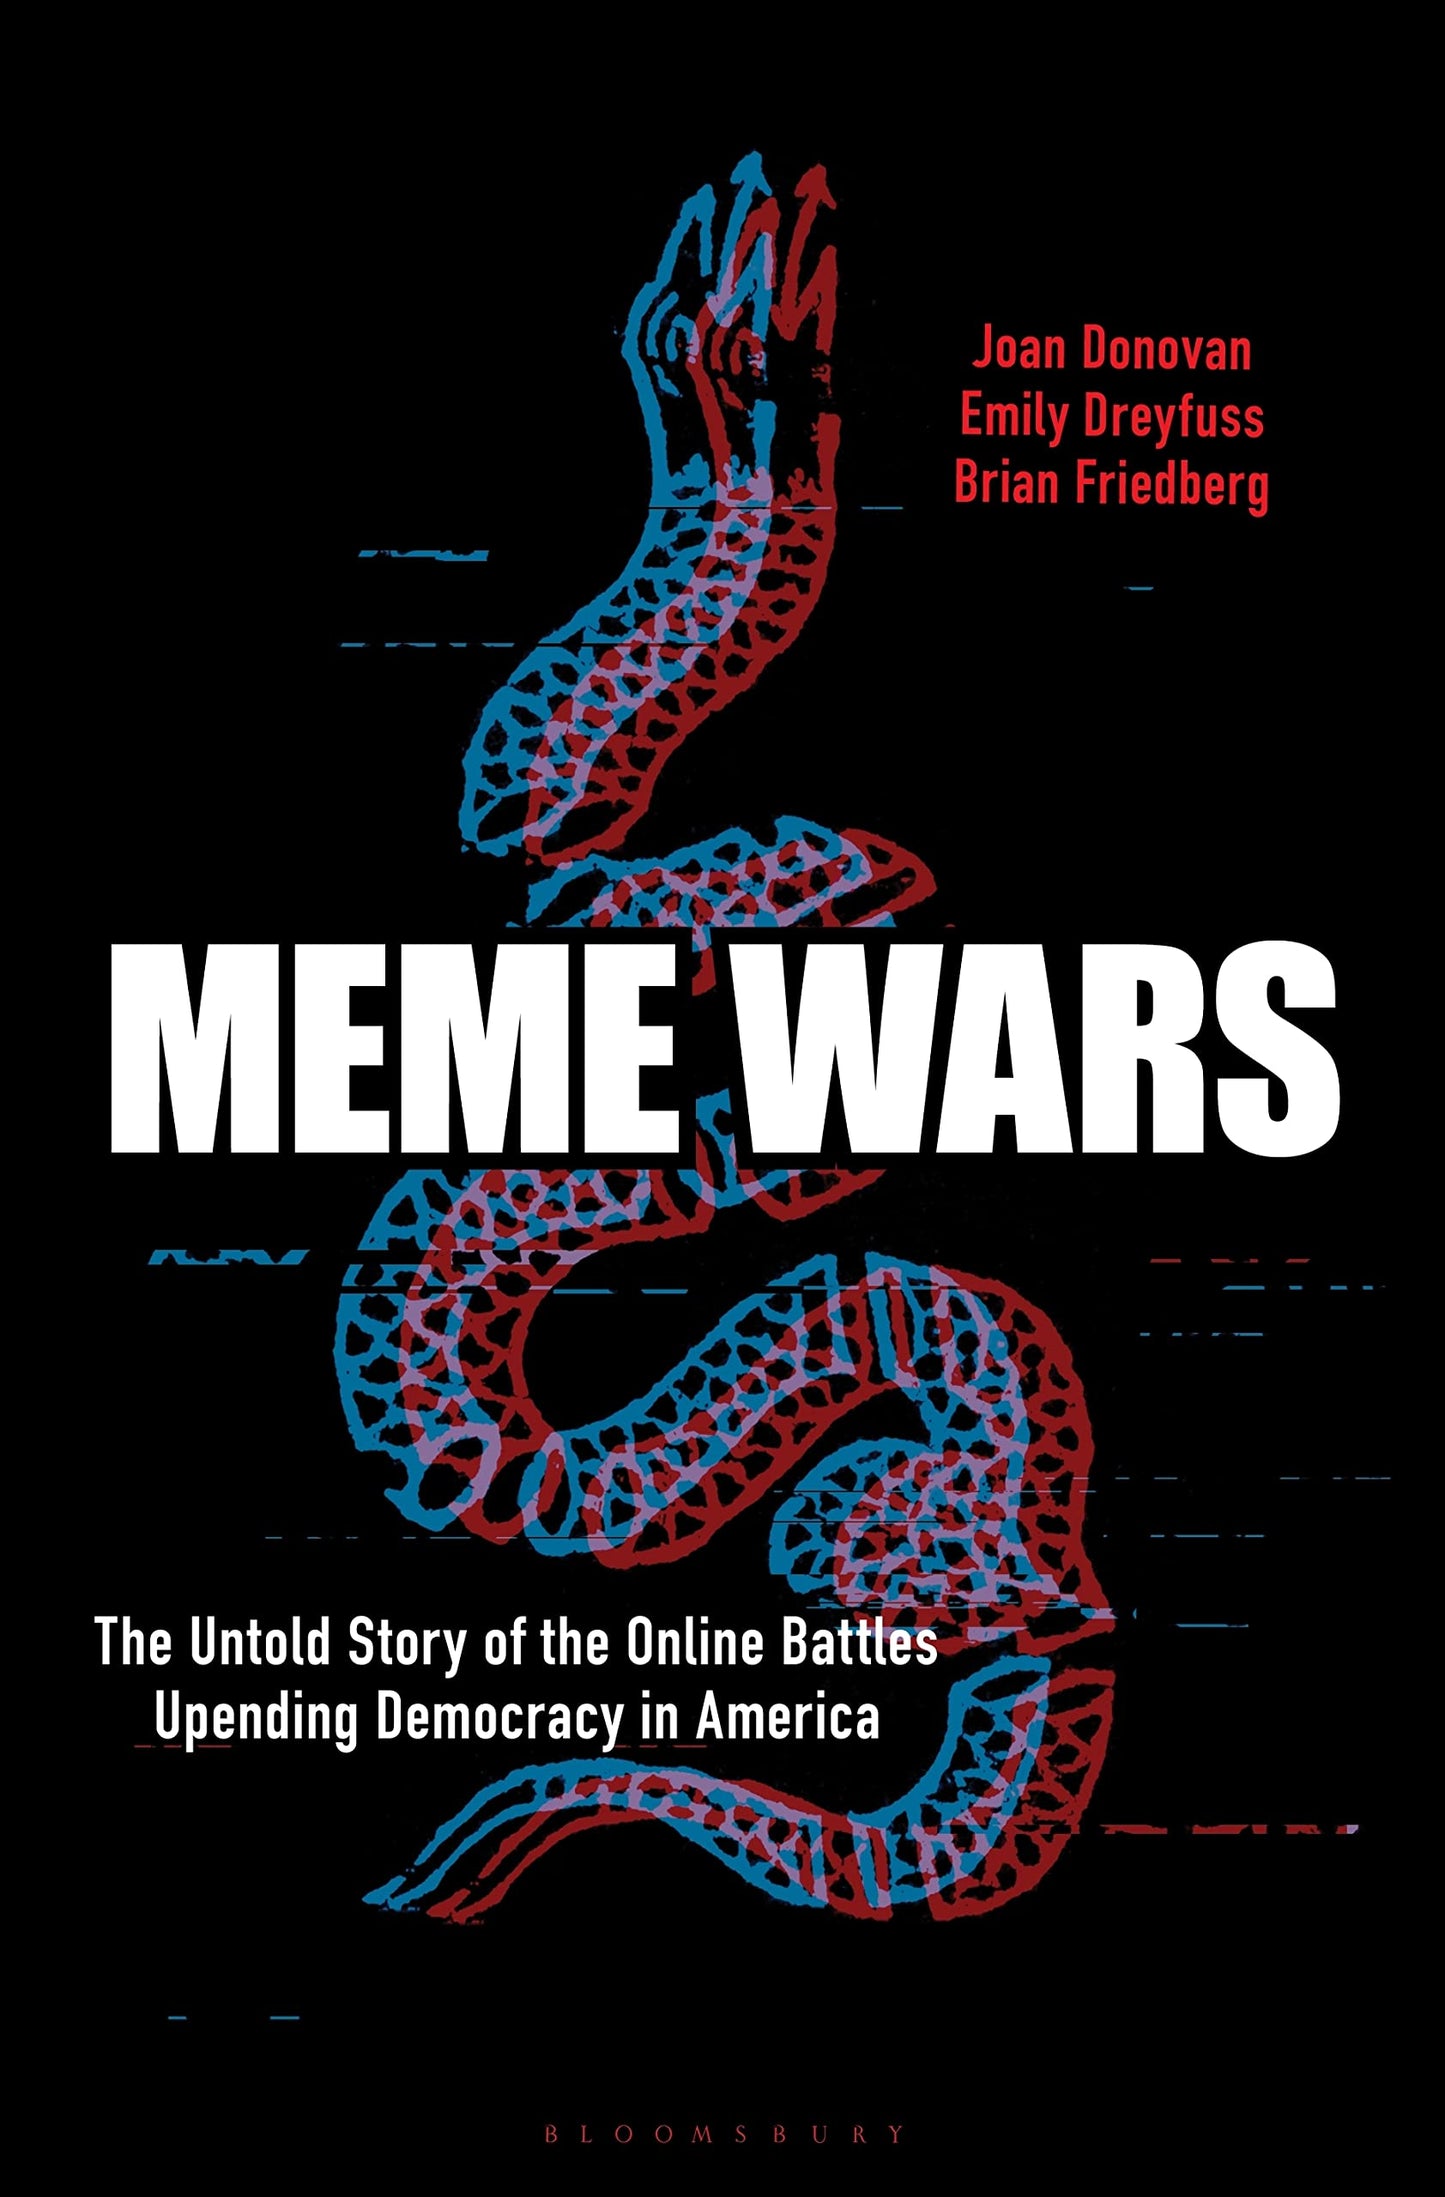 Meme Wars, by Joan Donovan